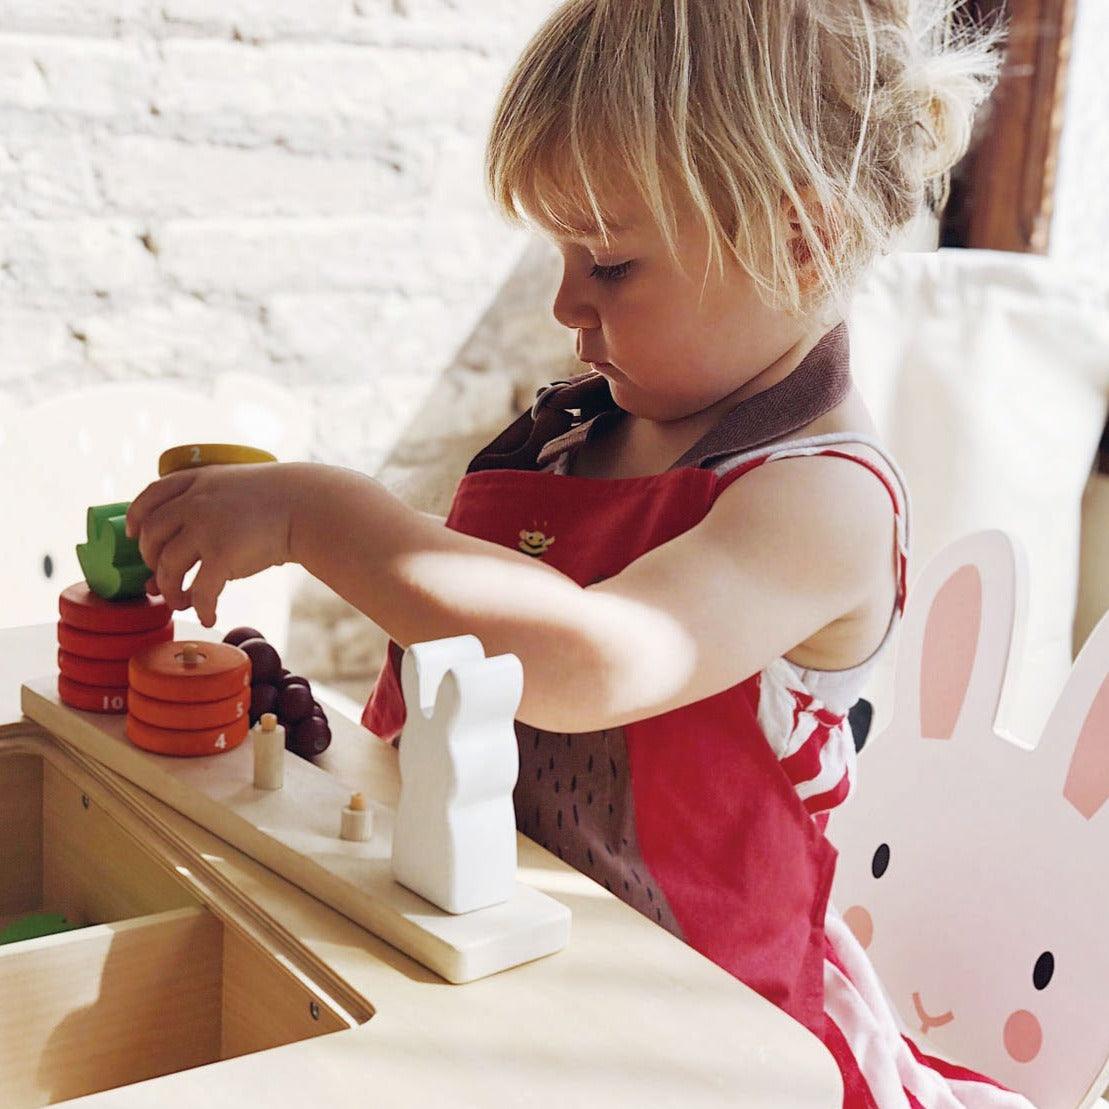 Tender Leaf Toys: stolik i dwa krzesełka dla dzieci Forest - Noski Noski